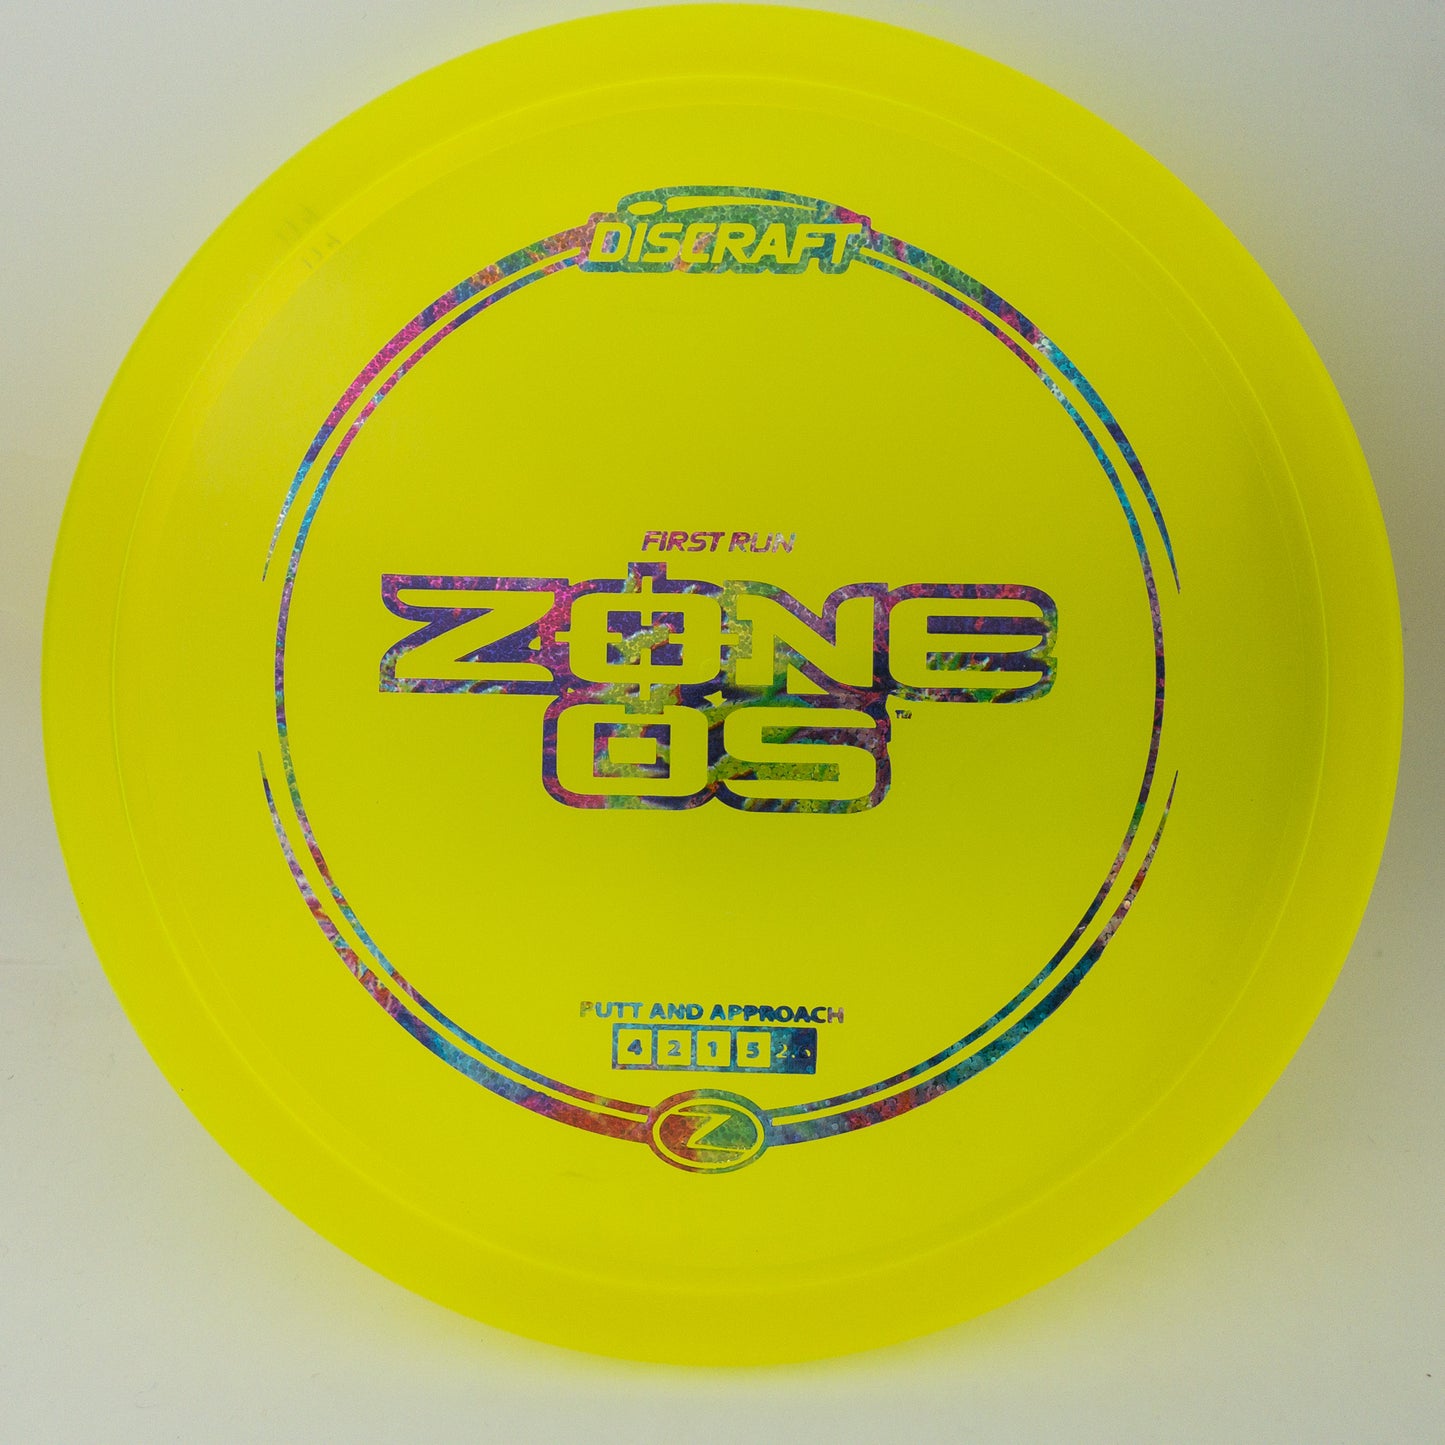 Discraft Z-Line Zone OS - First Run